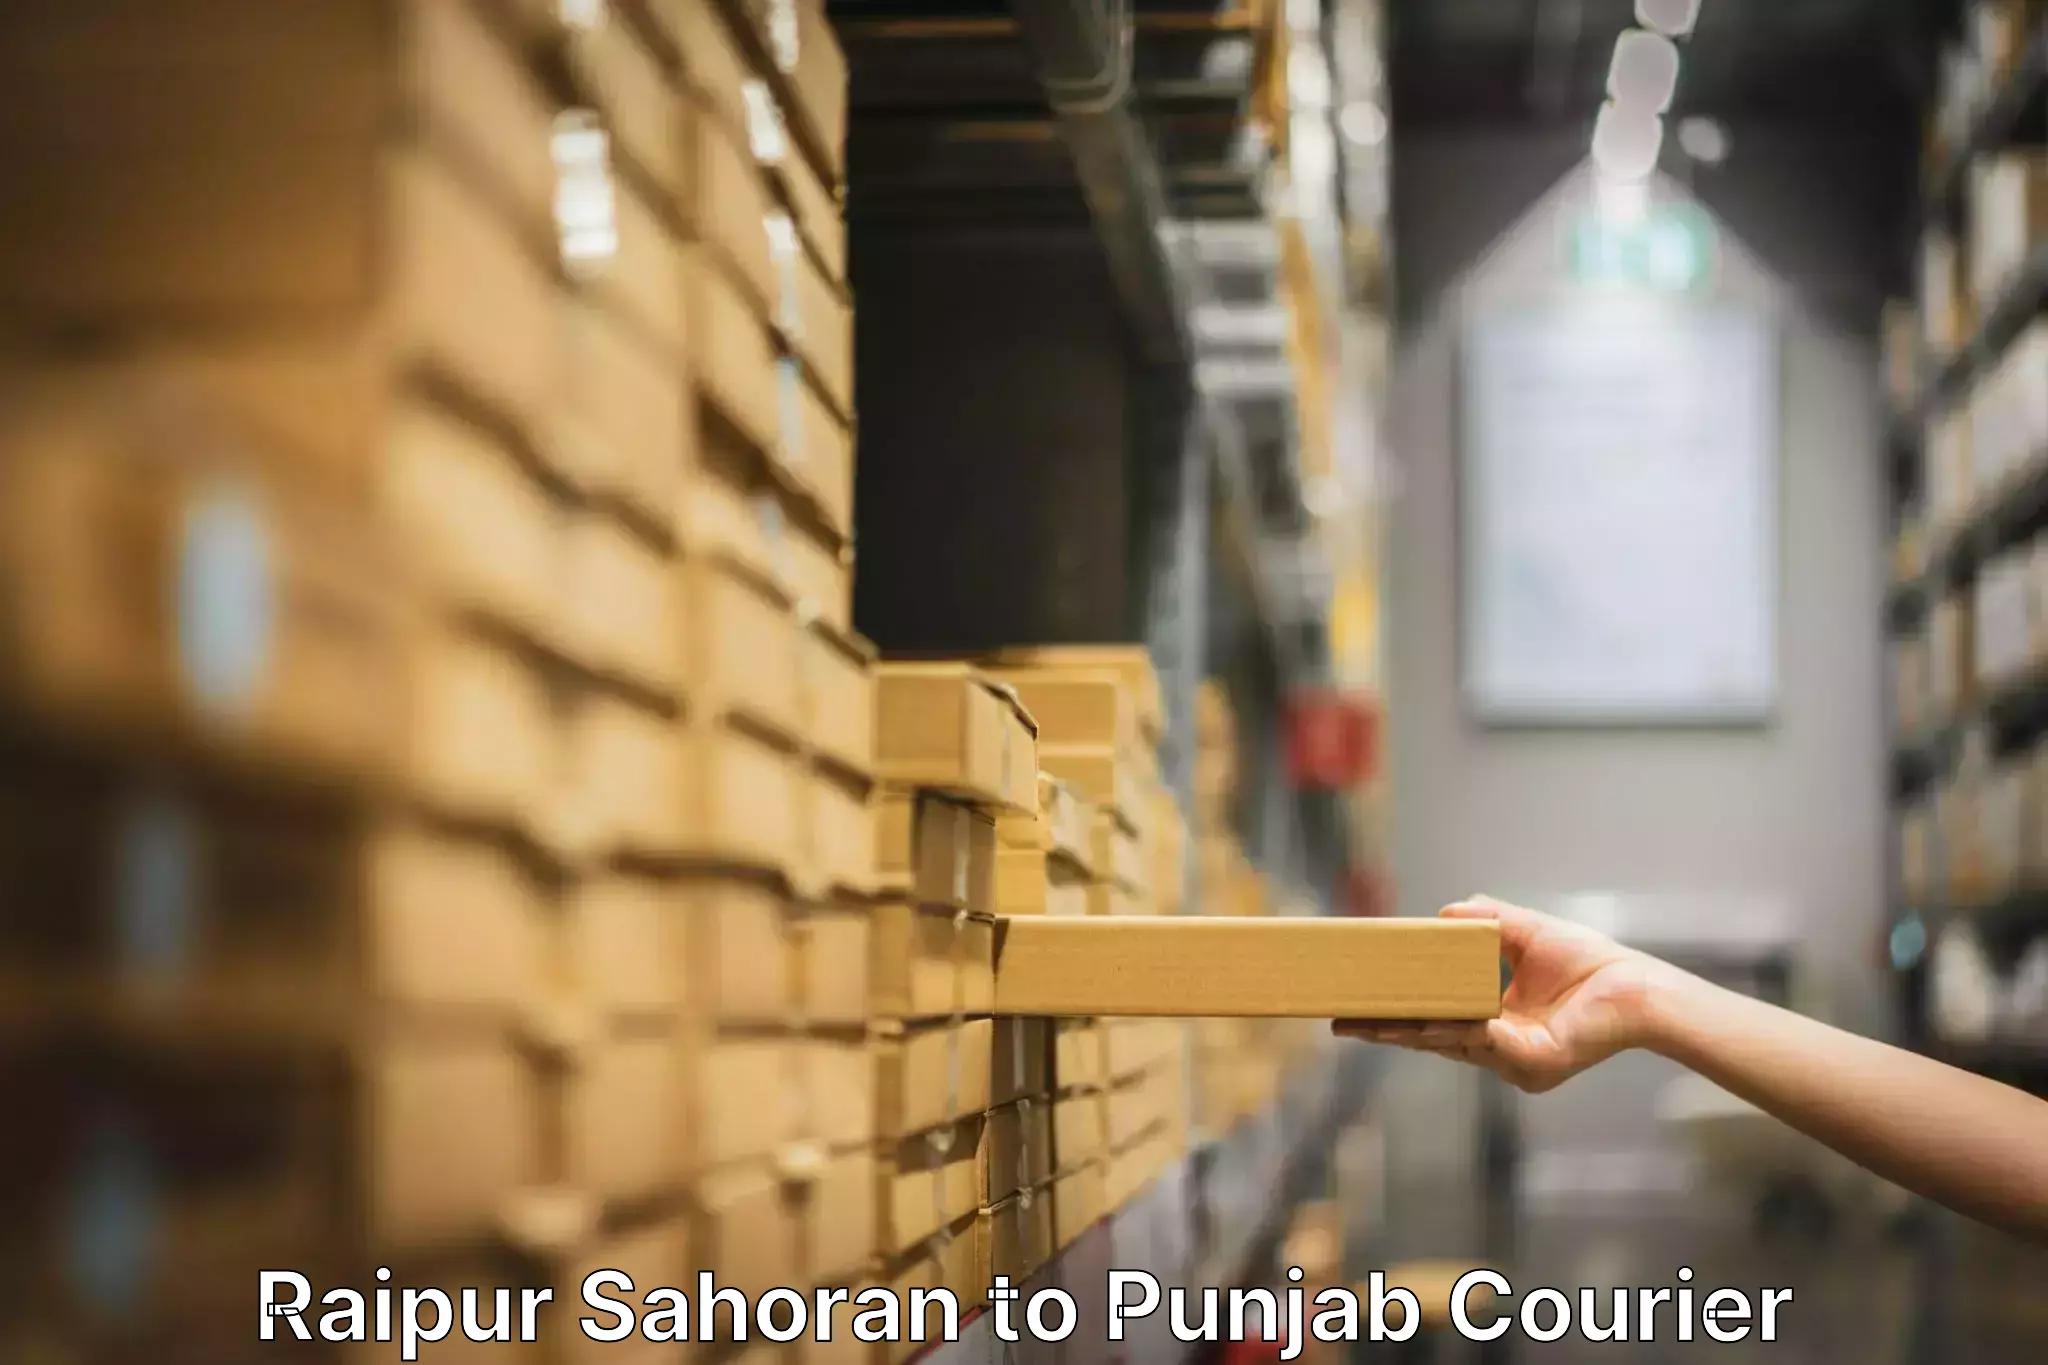 Trusted moving company Raipur Sahoran to Jalandhar